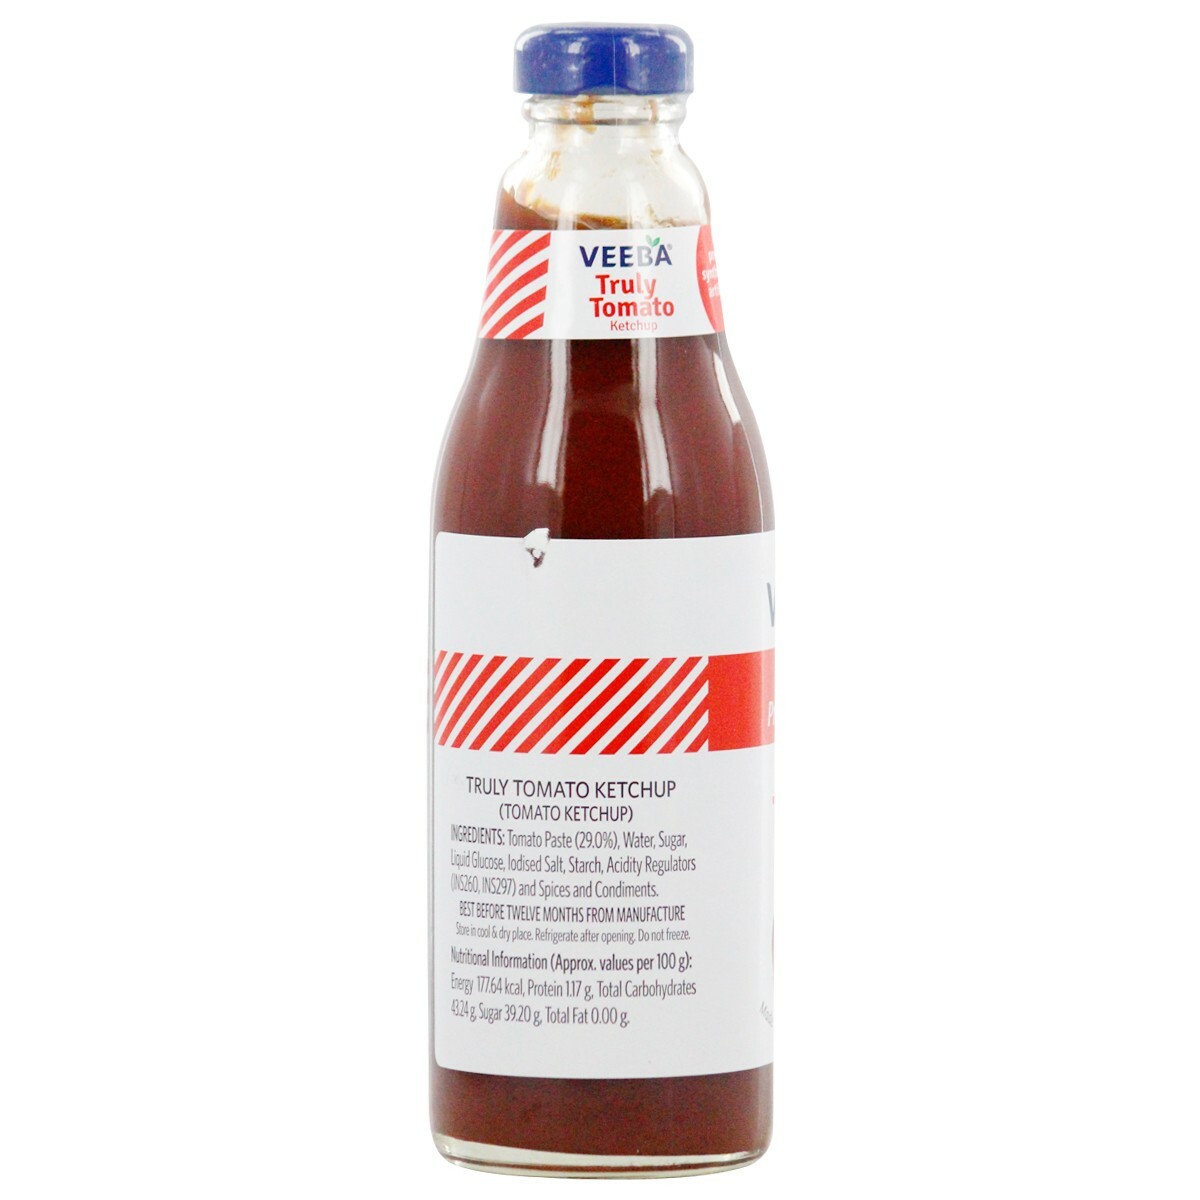 Veeba Truly Tomato Ketchup 500g